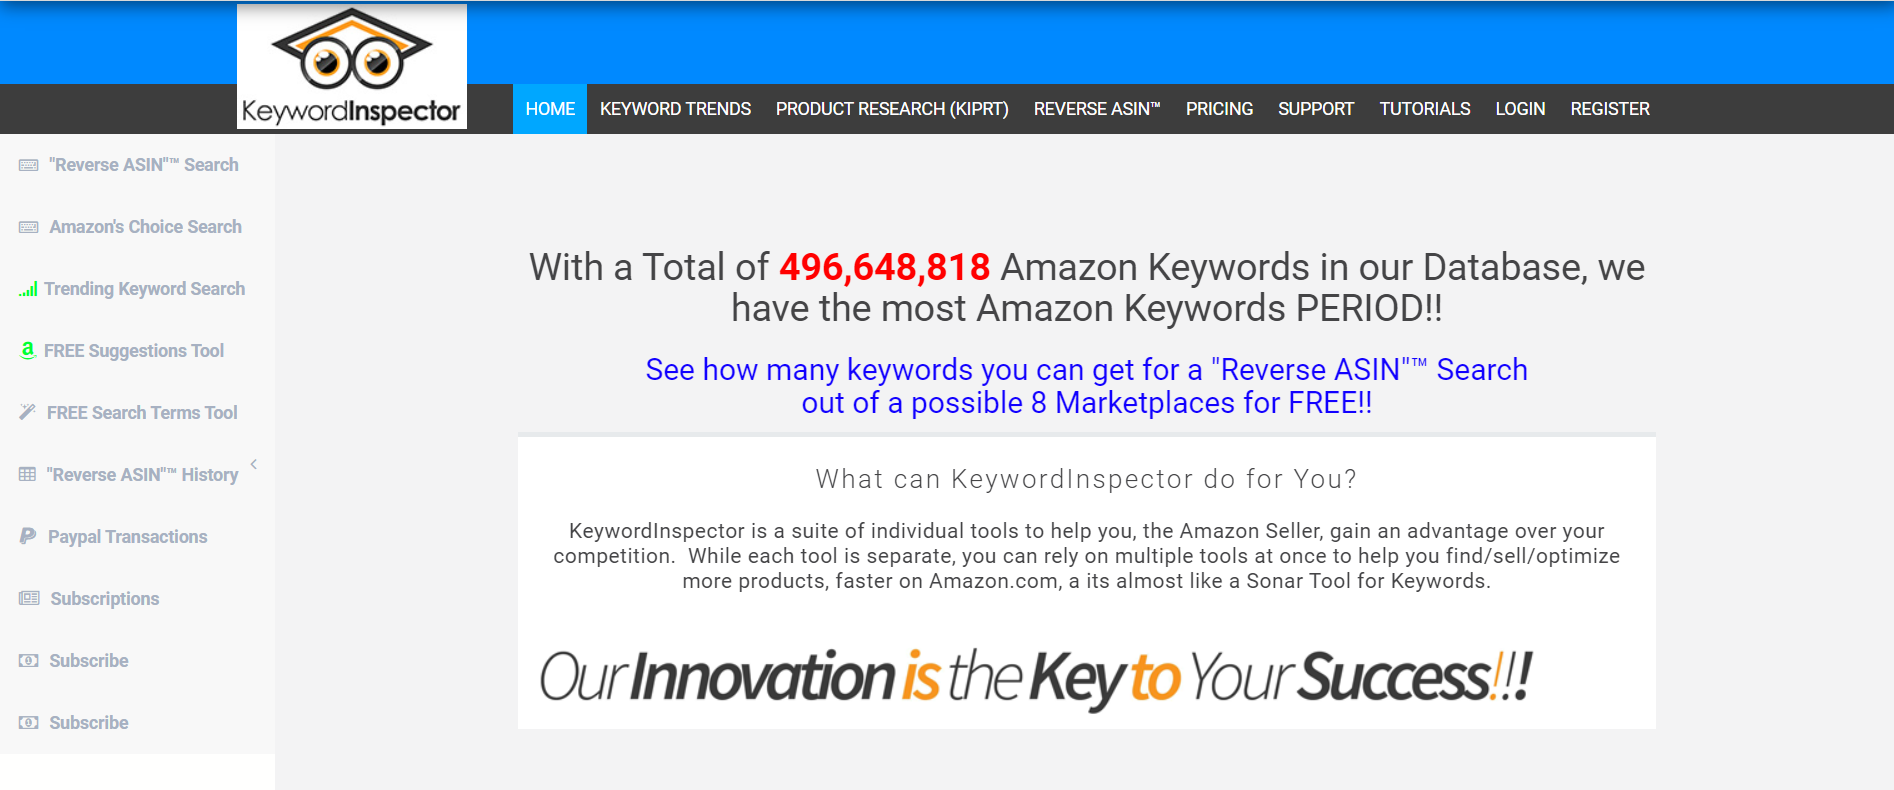 Keyword Inspector - Amazon Keyword Research Tool